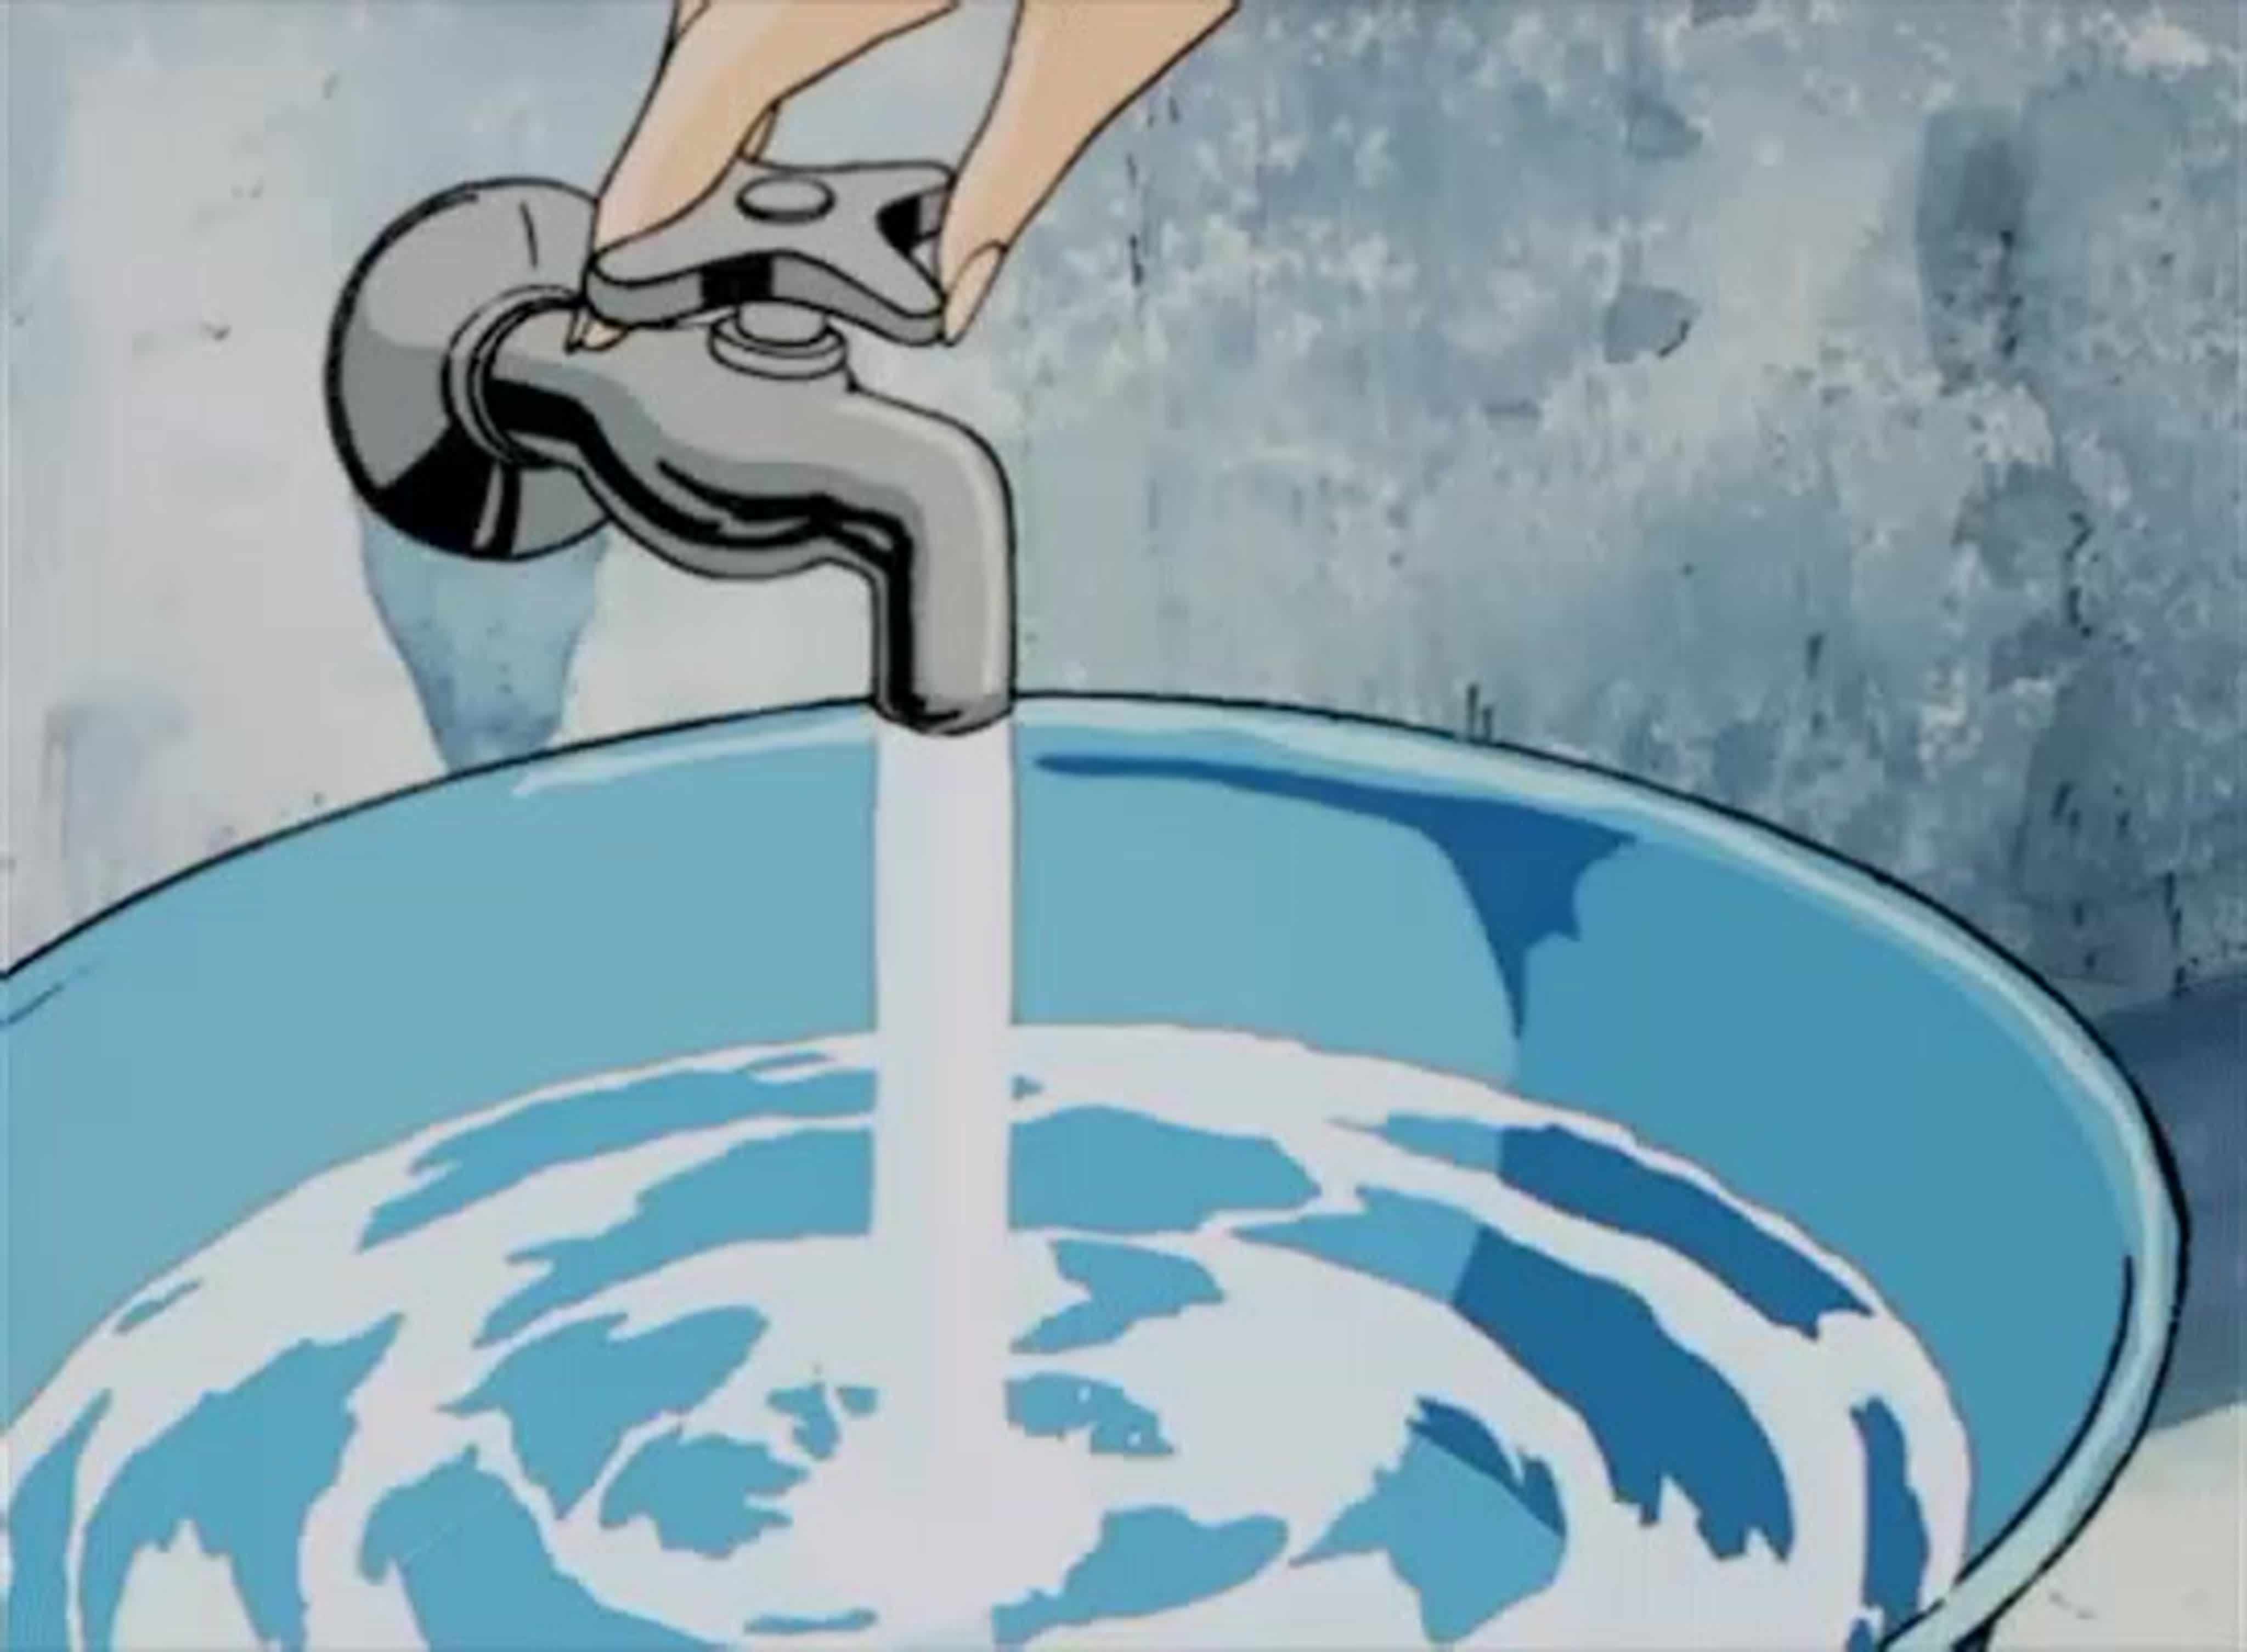 Глаз горячая вода. Кран с водой. Кран с водой мультяшный. Протекающий кран. Вода мультяшная.